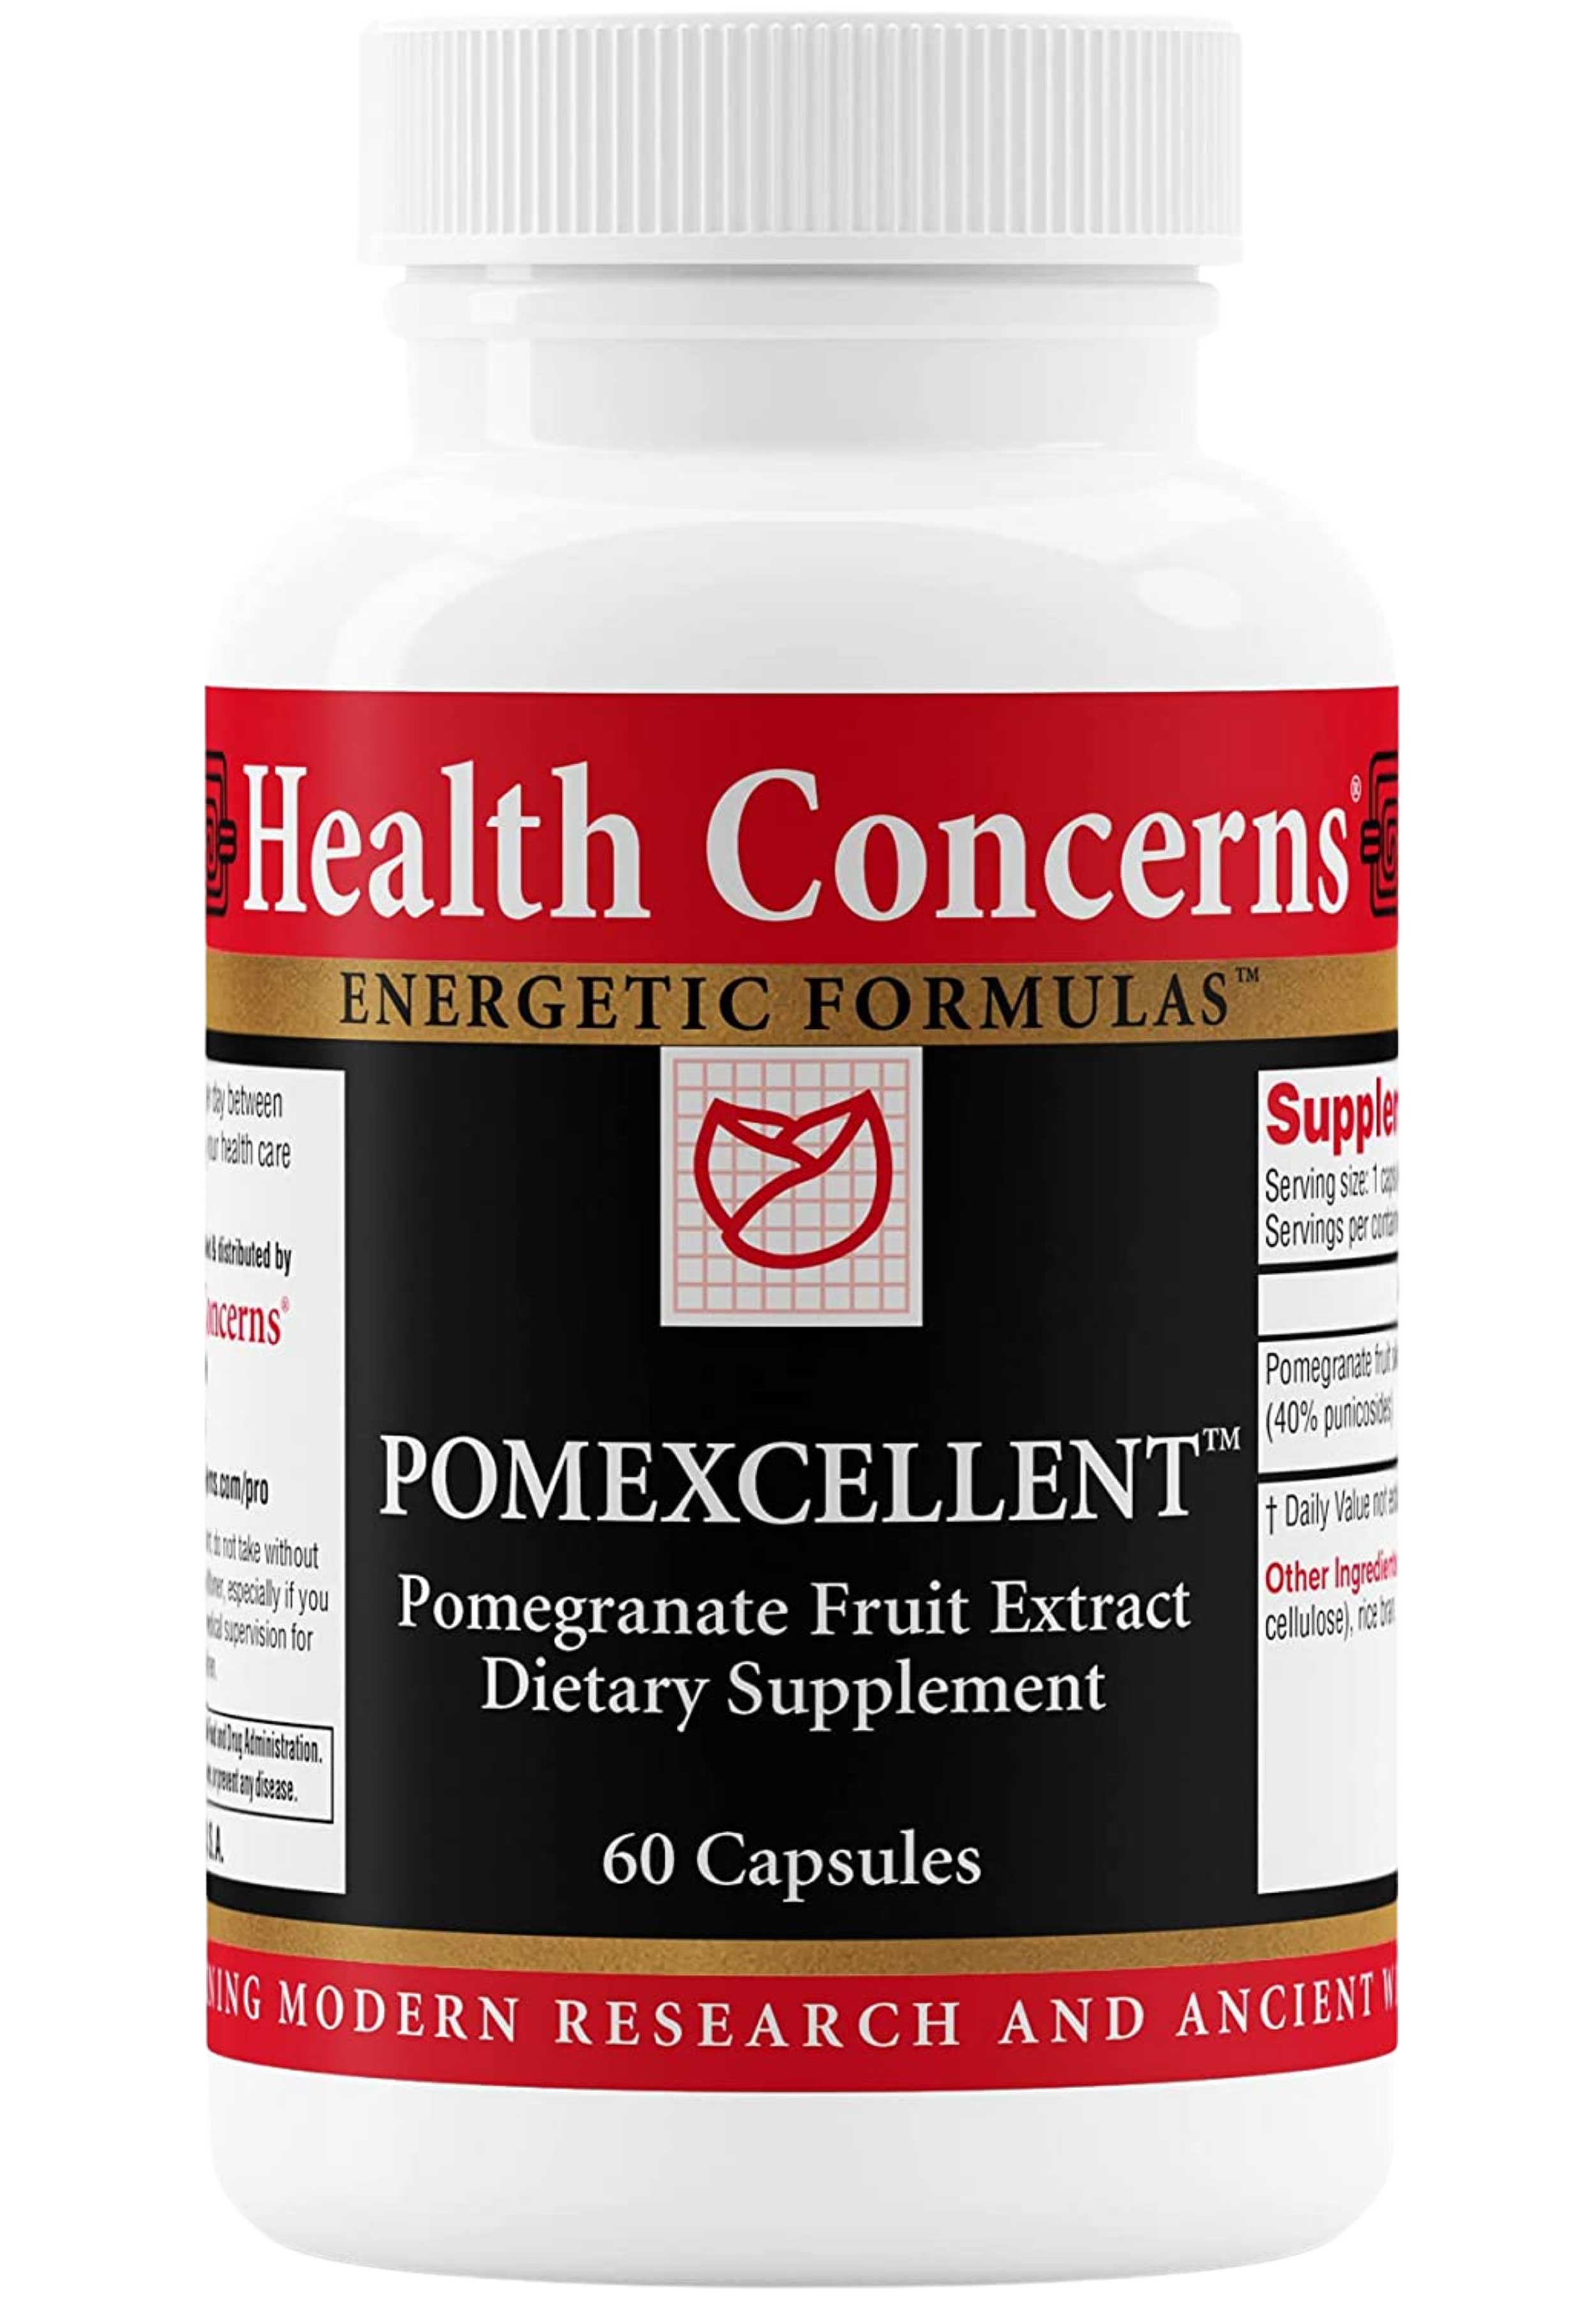 Health Concerns Pomexcellent